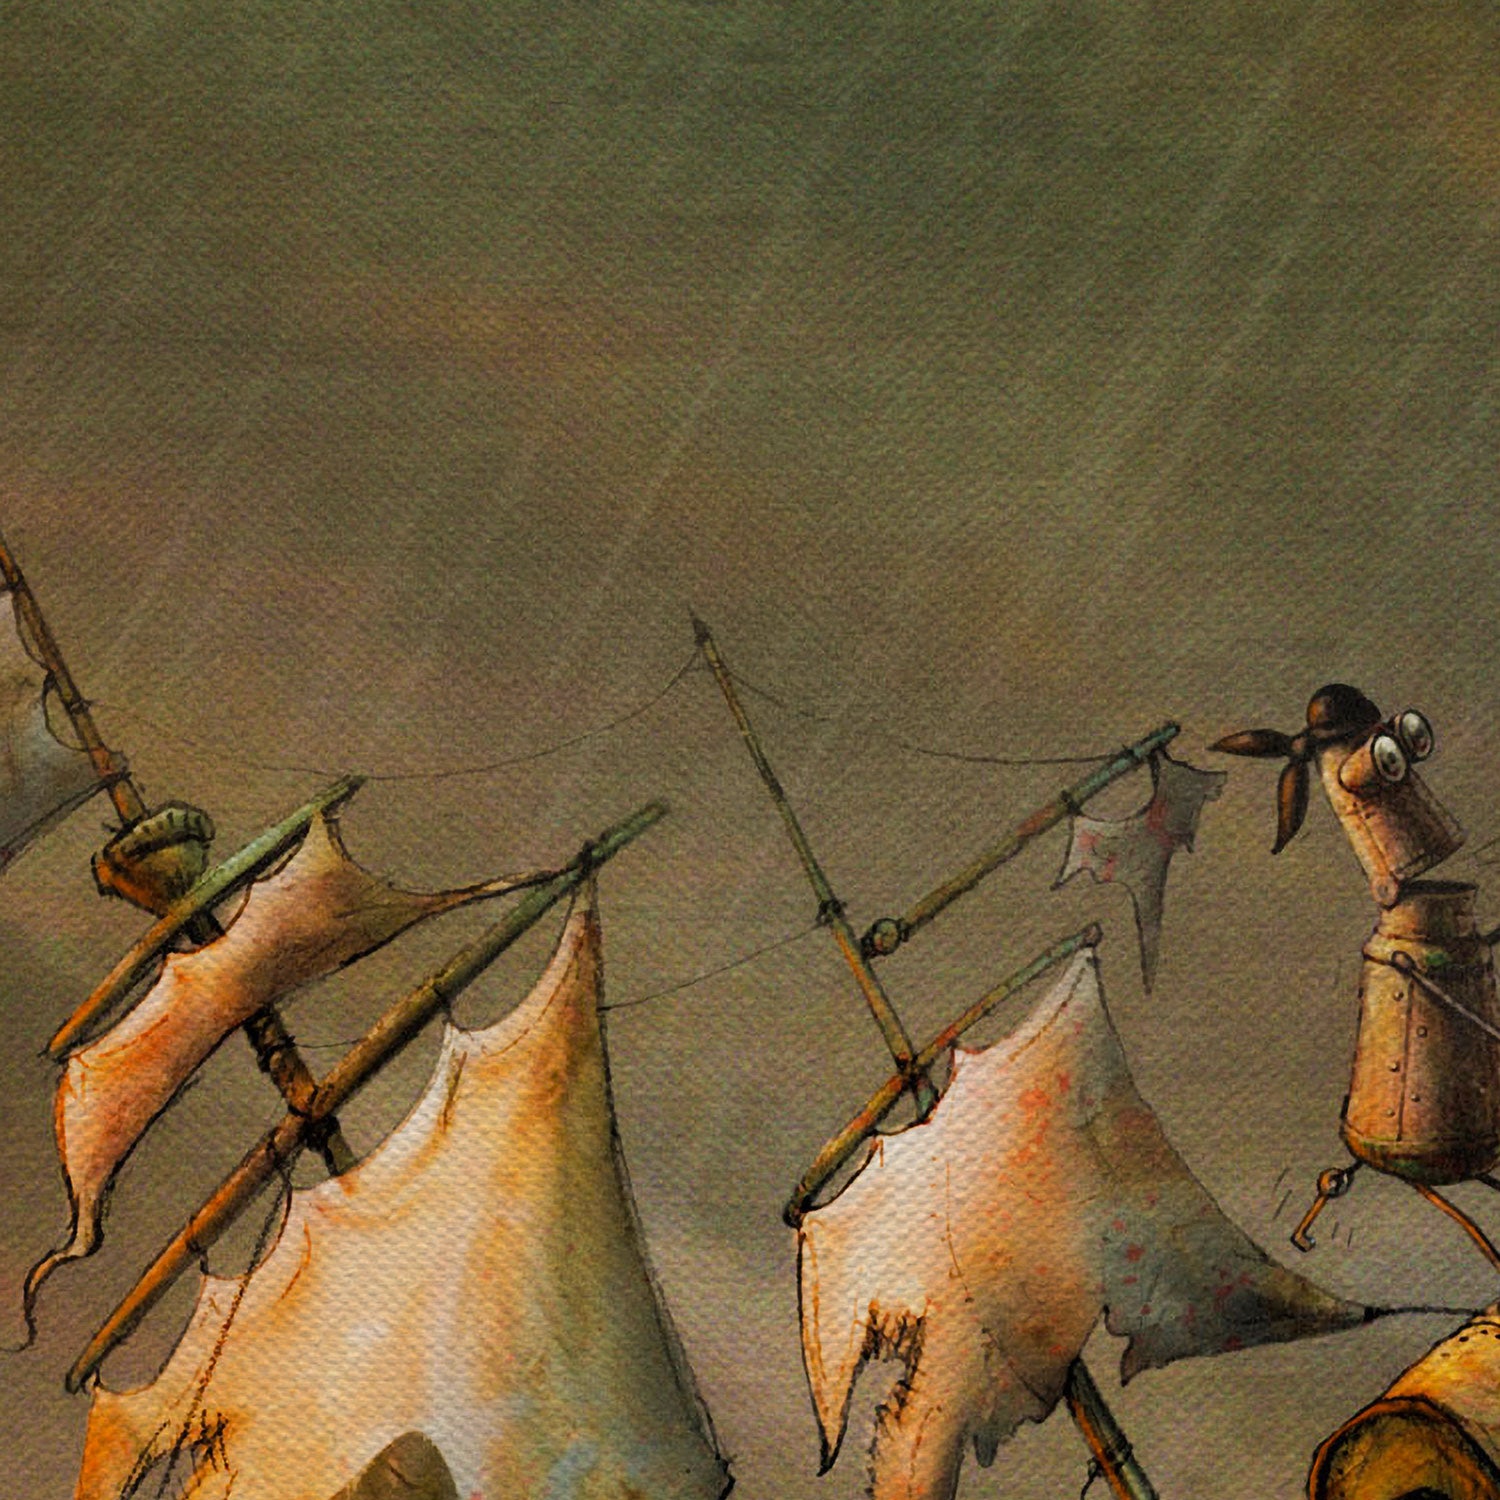 Steampunk Pirate Ship Wall Art Canvas